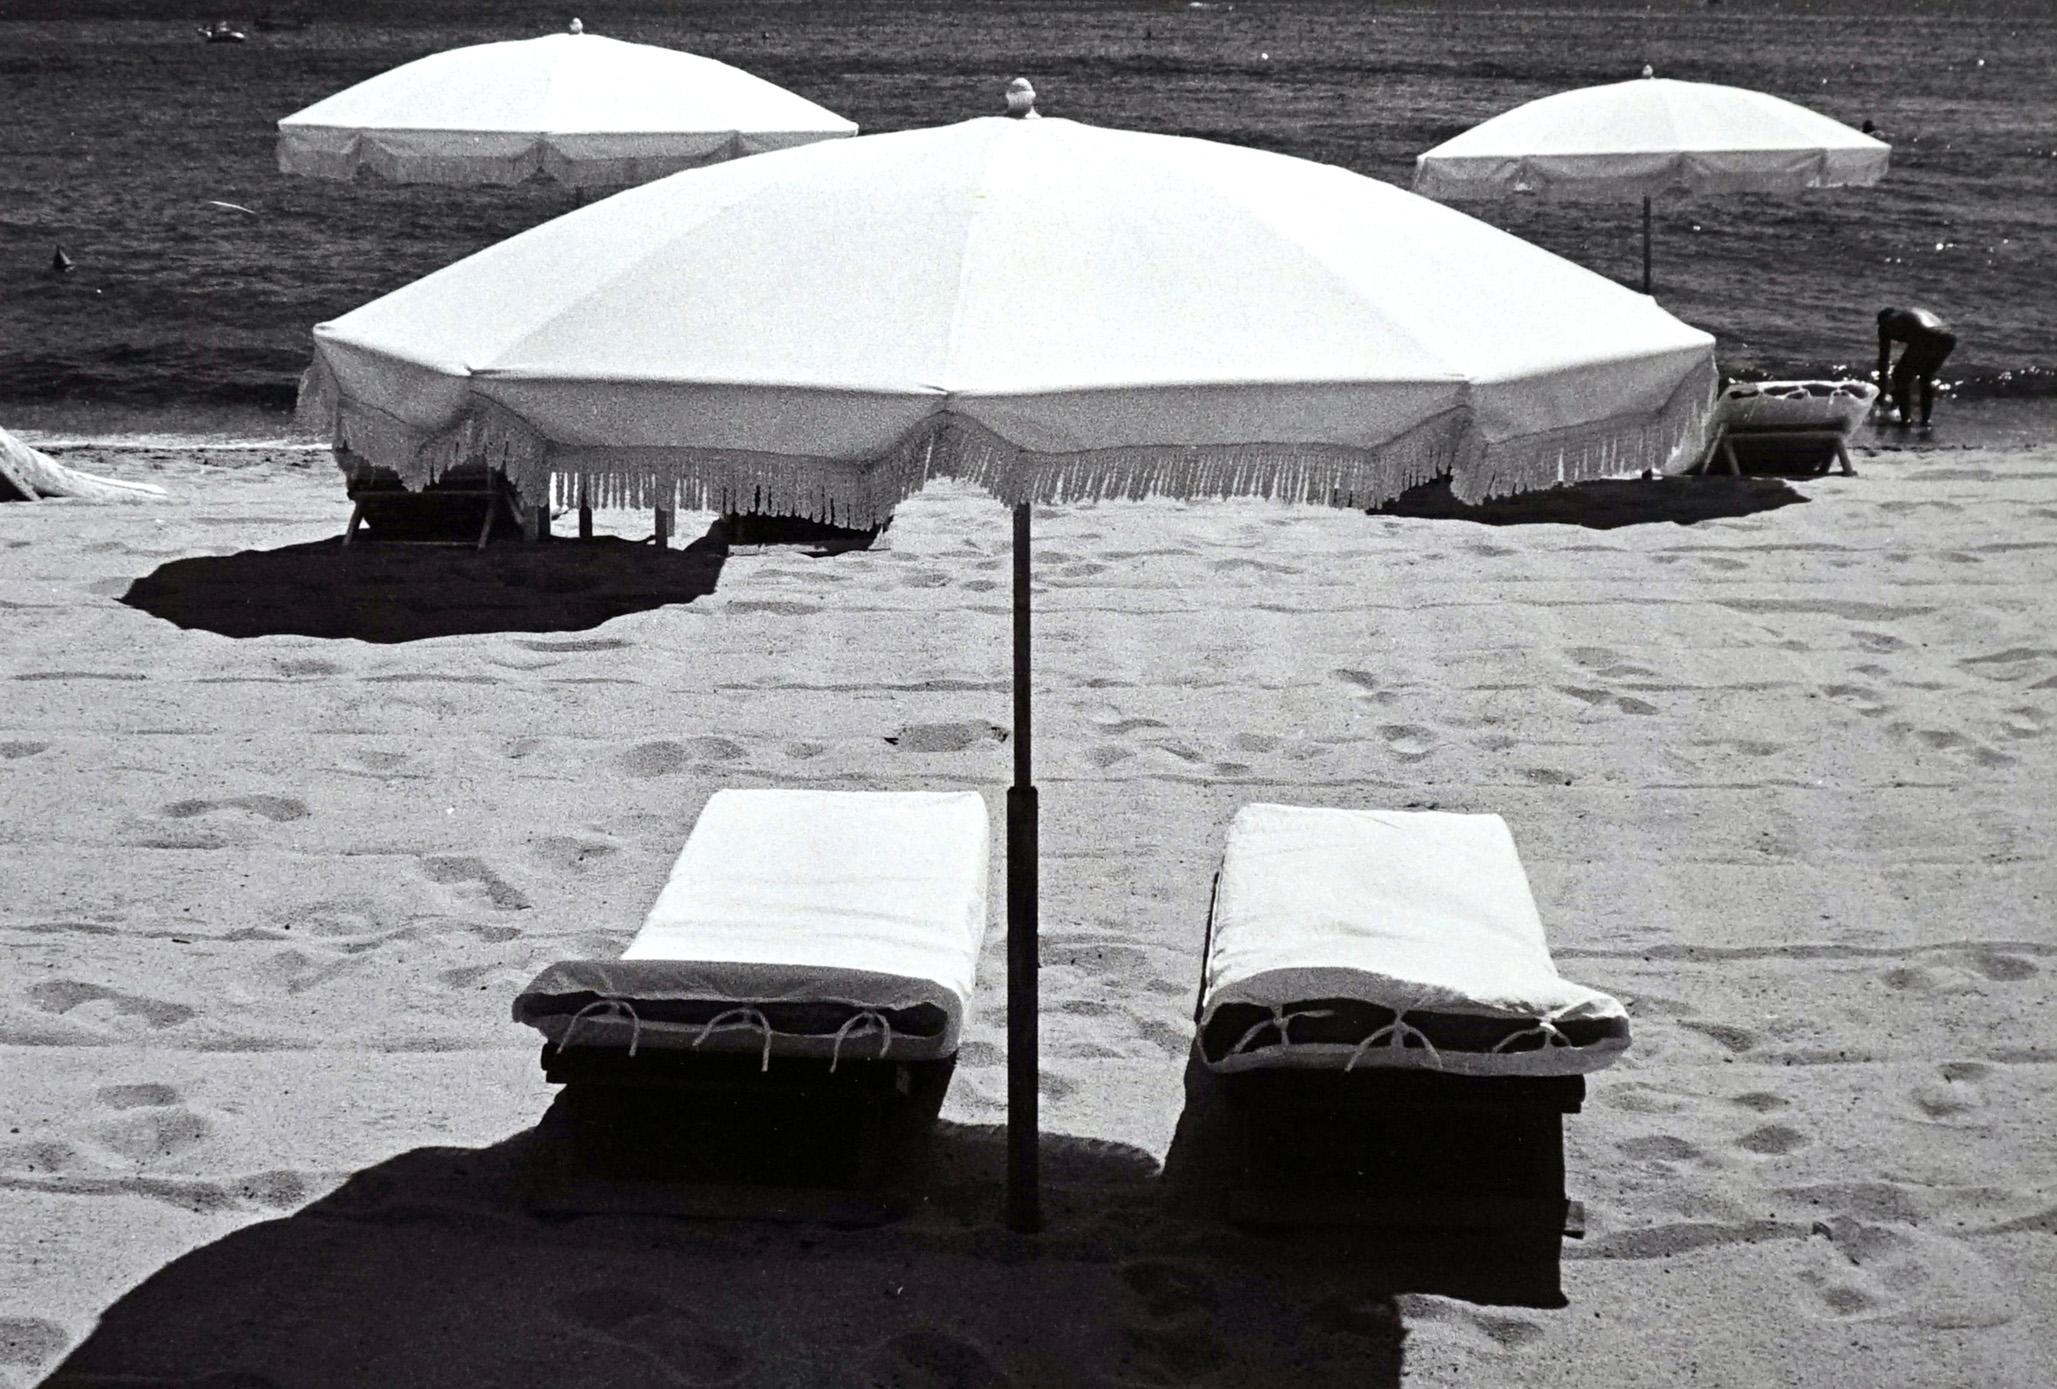 Jörg Krichbaum Abstract Photograph - Rivages - Off-Print # 1 -St Tropez - 1978 - Minimalist Black & White Photography